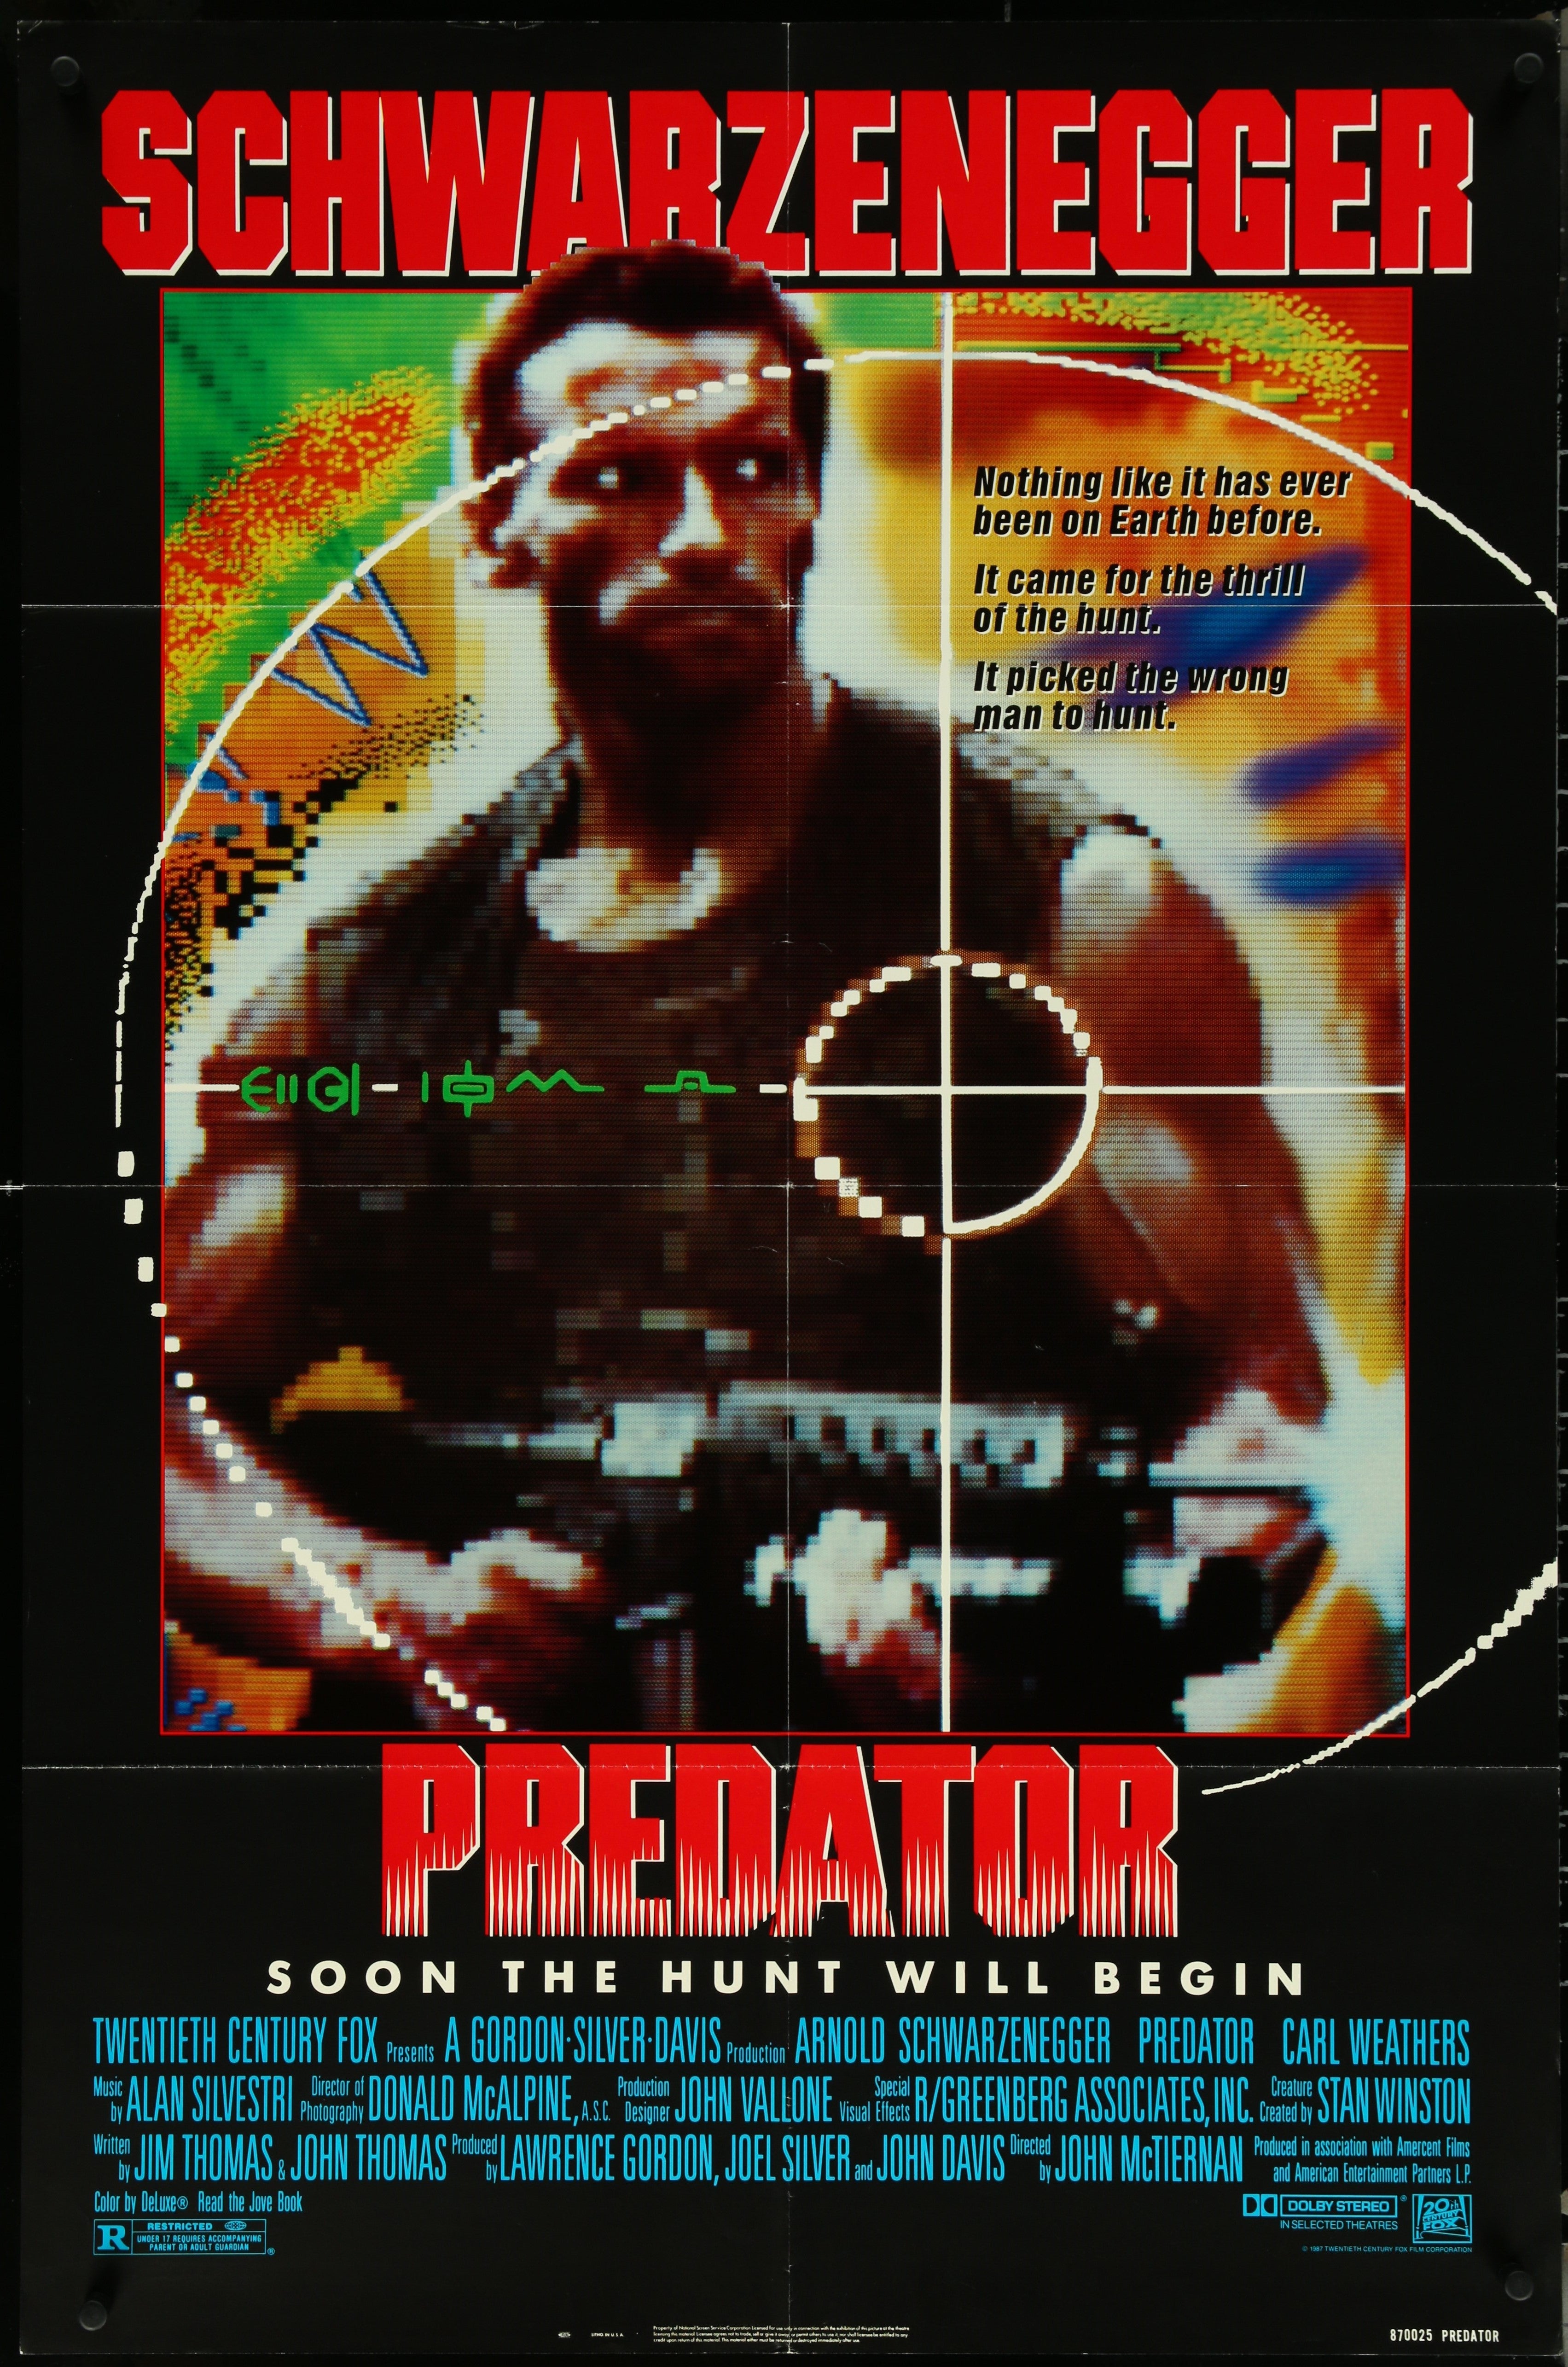 PREDATOR (1987)